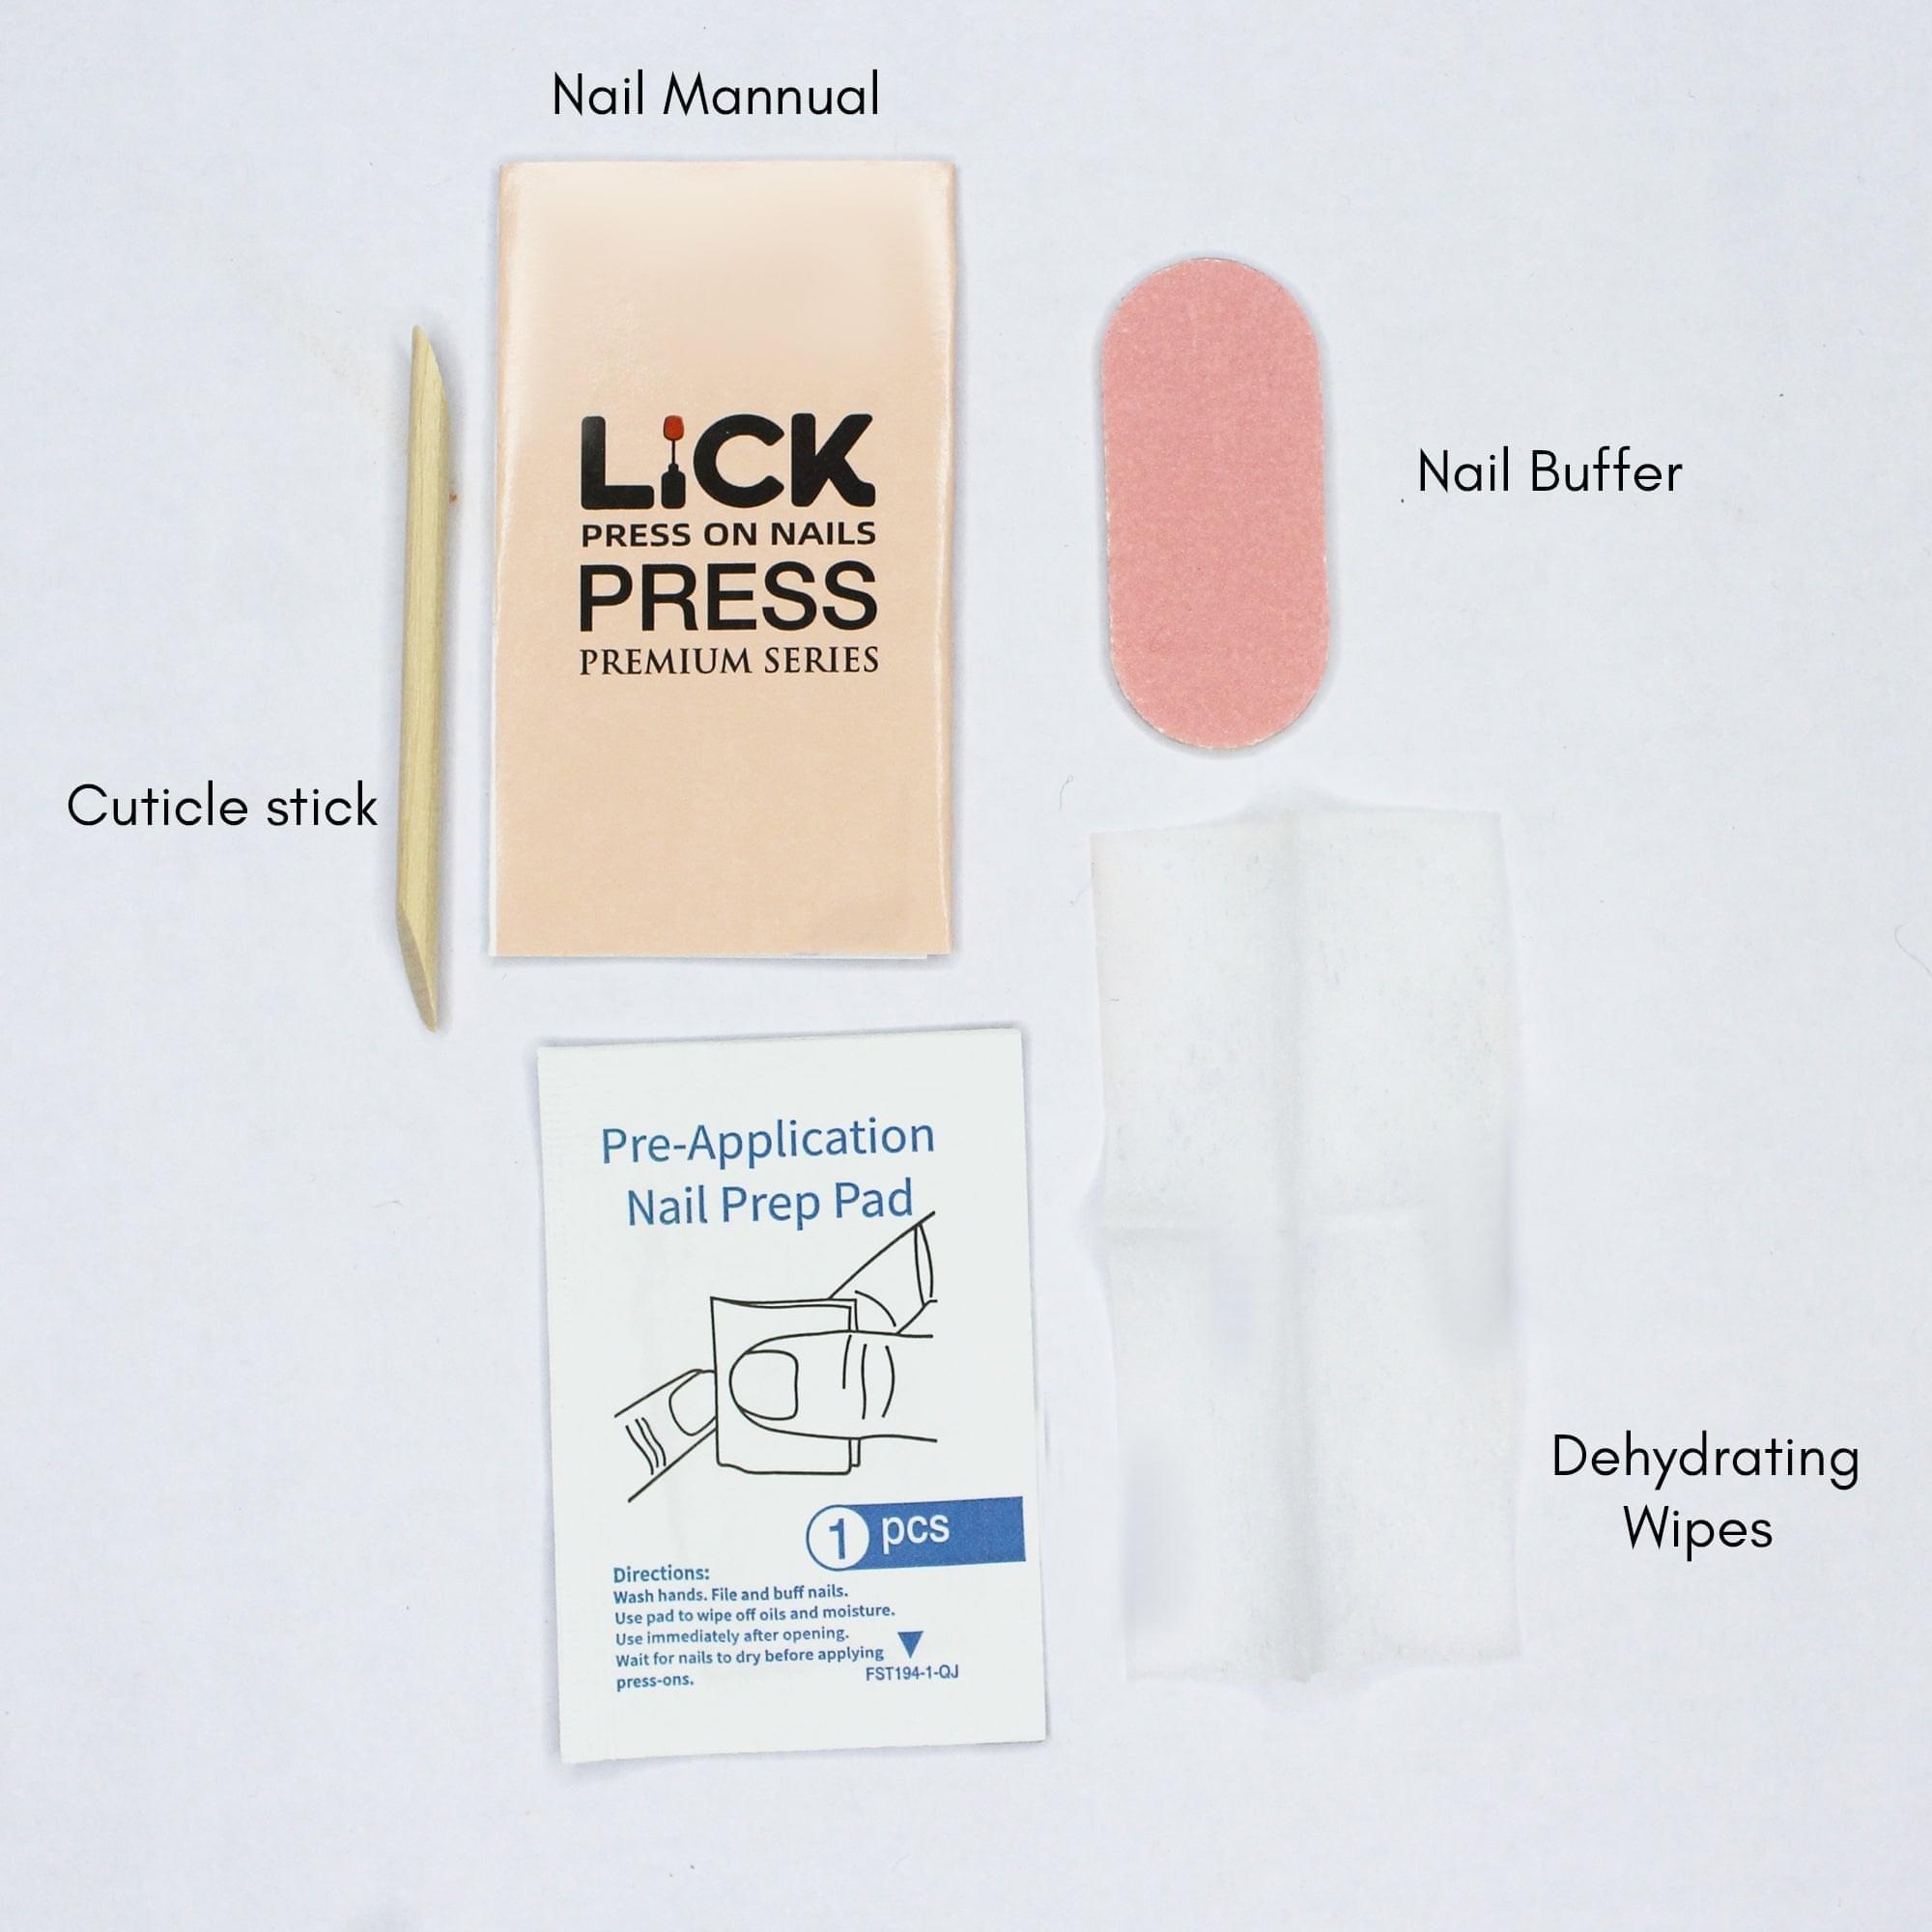 Lick Nail Glossy Finish Floral Colours Ballerina Shape Press On Nails Pack Of 30 Pcs